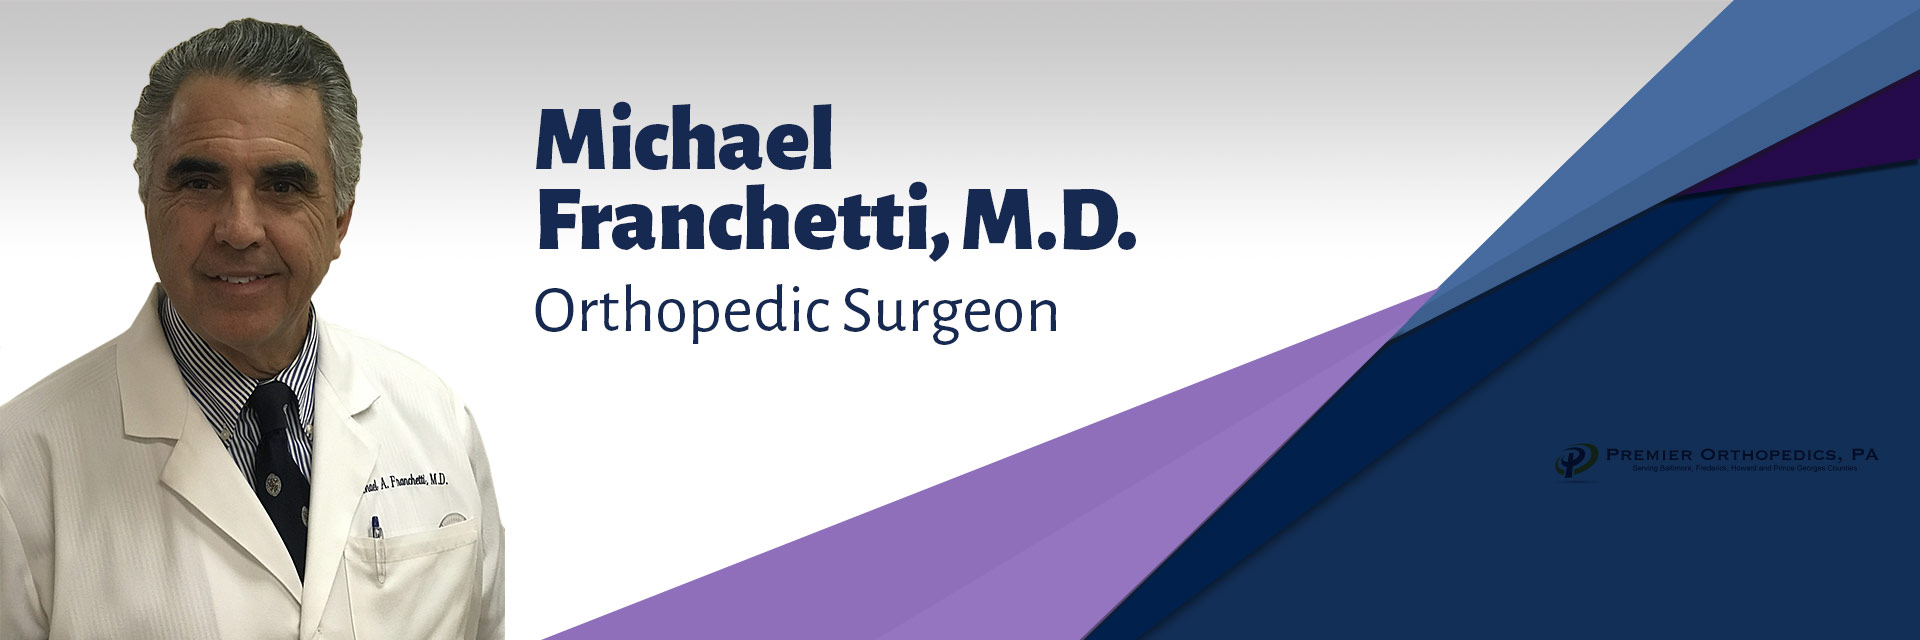 Michael Franchitti orthopedic surgeon